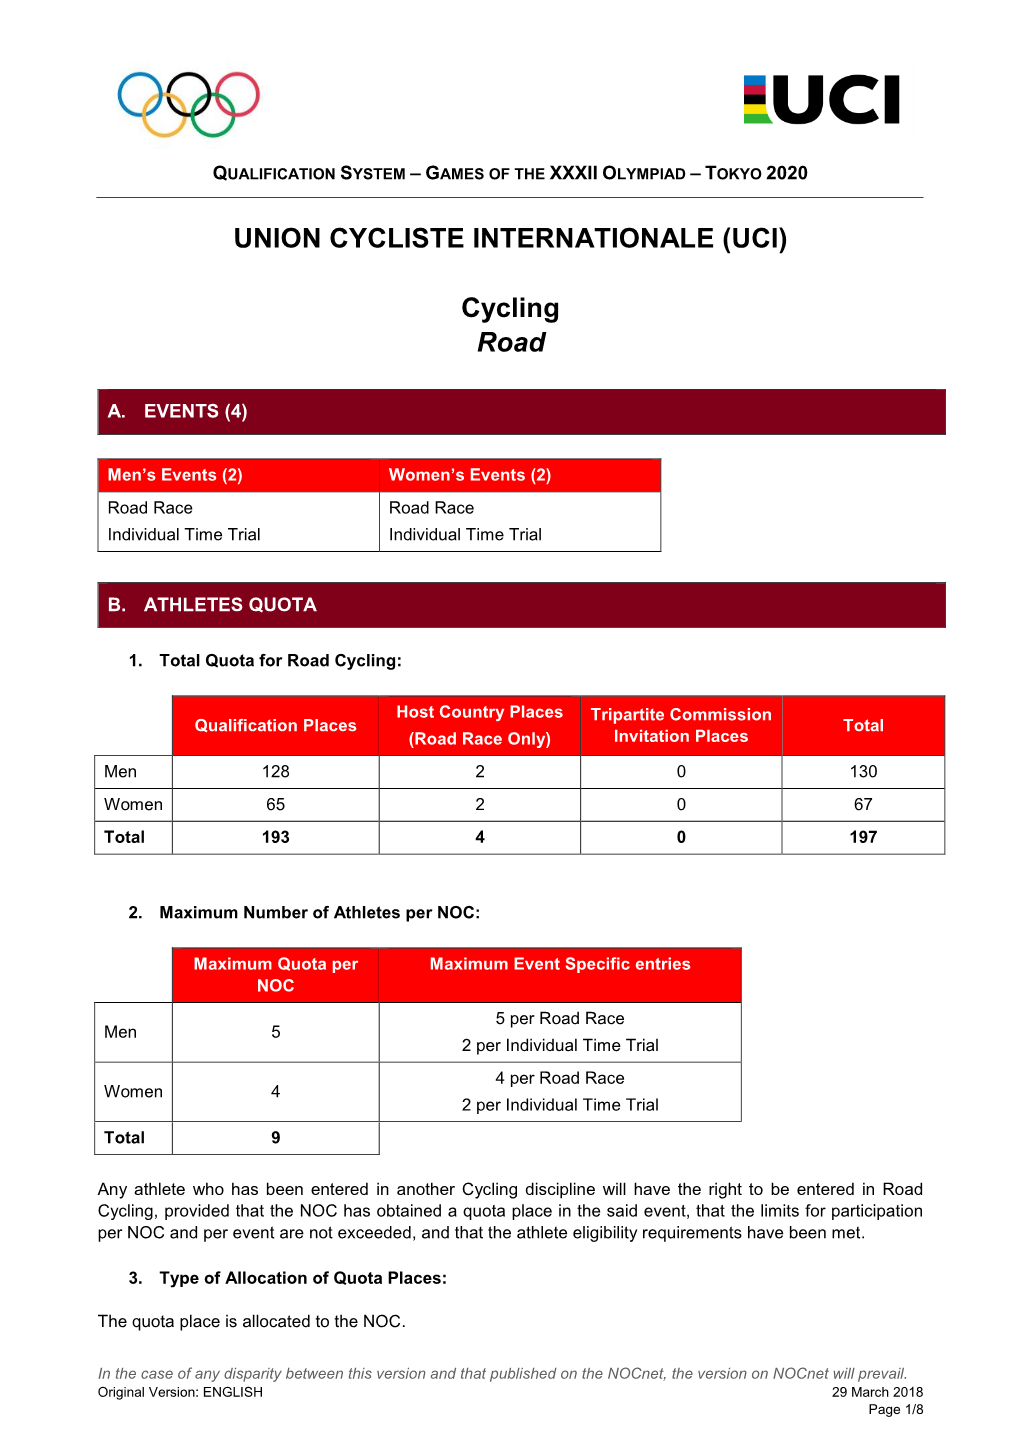 UNION CYCLISTE INTERNATIONALE (UCI) Cycling Road